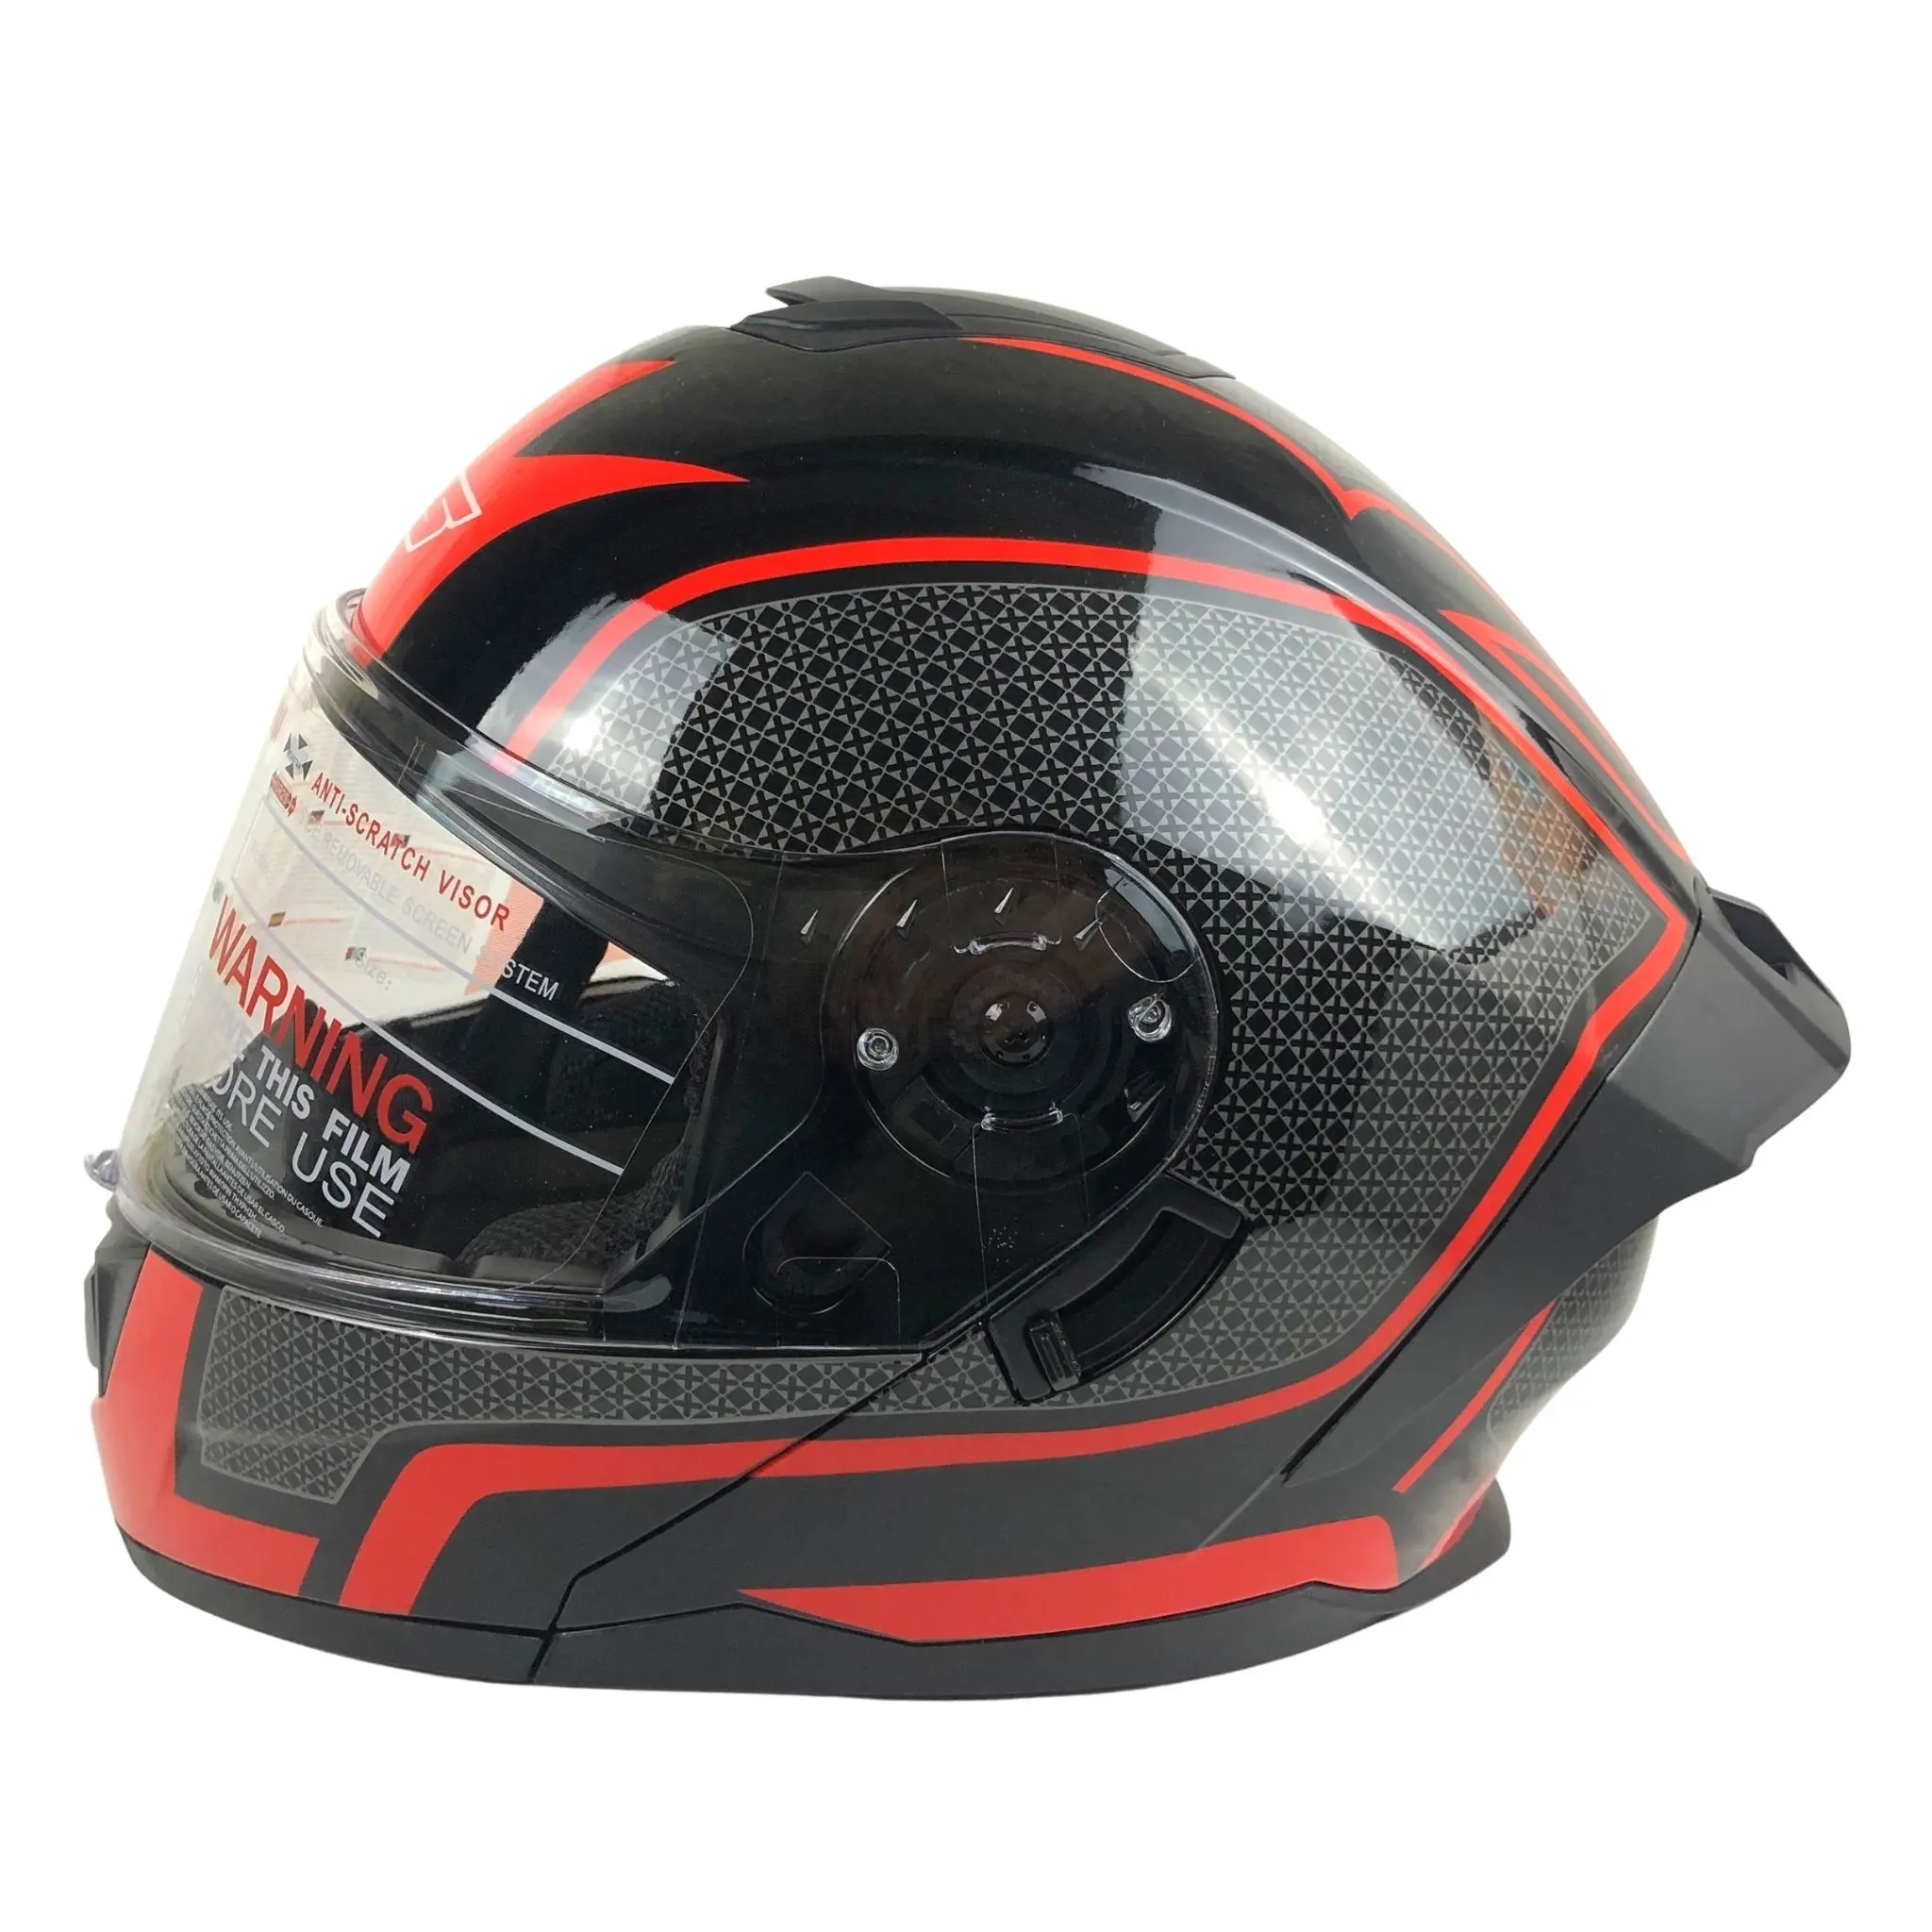 Flip Up helmet ABS Material Modular Dual Lens Motorcycle Helmets